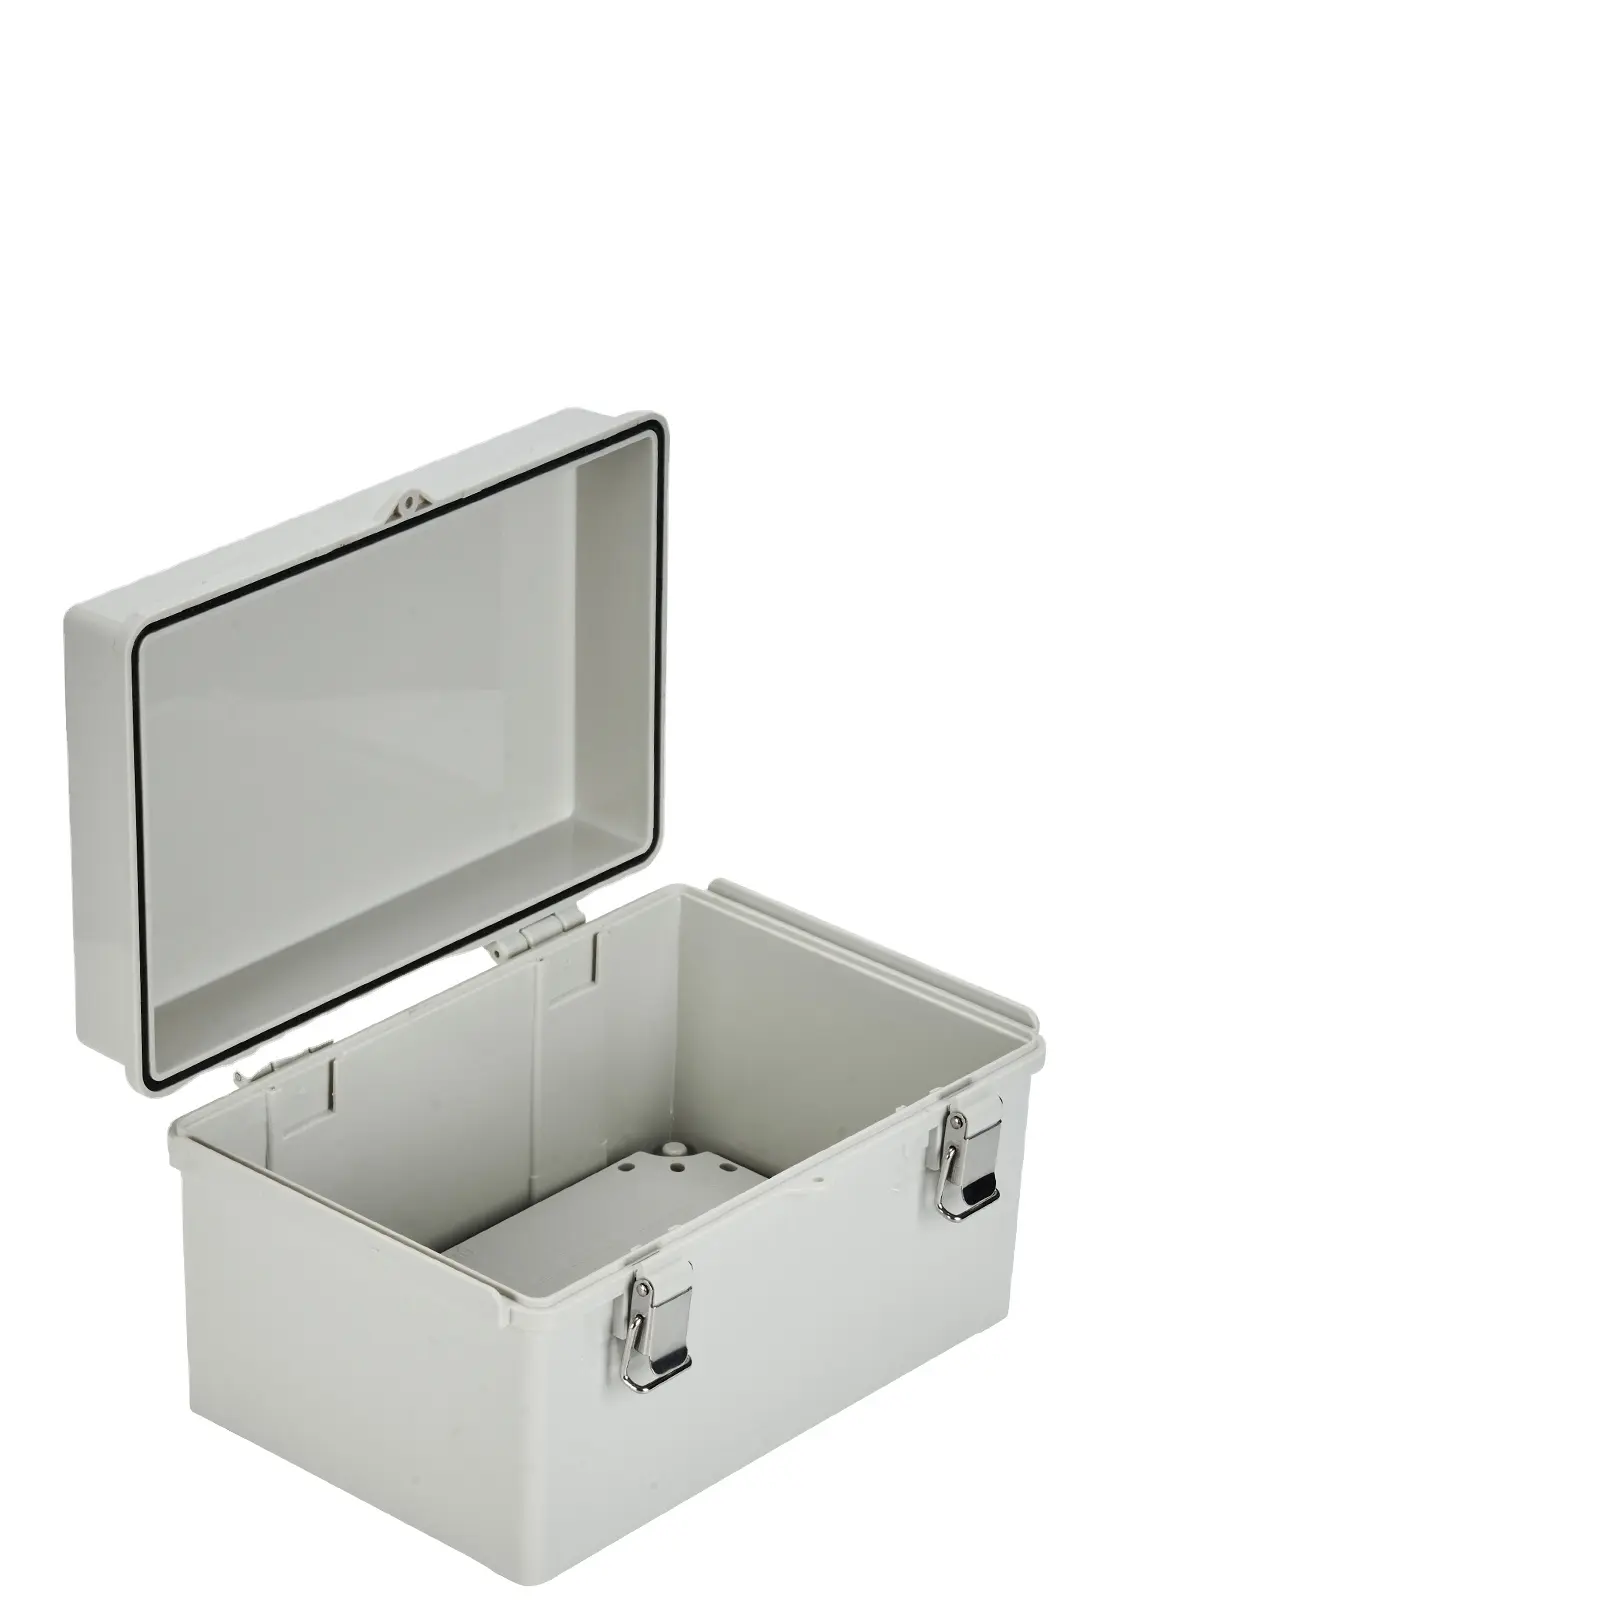 Caja de empalme de plástico impermeable con broche para exteriores, caja de distribución eléctrica para jardín, con interruptor sellado